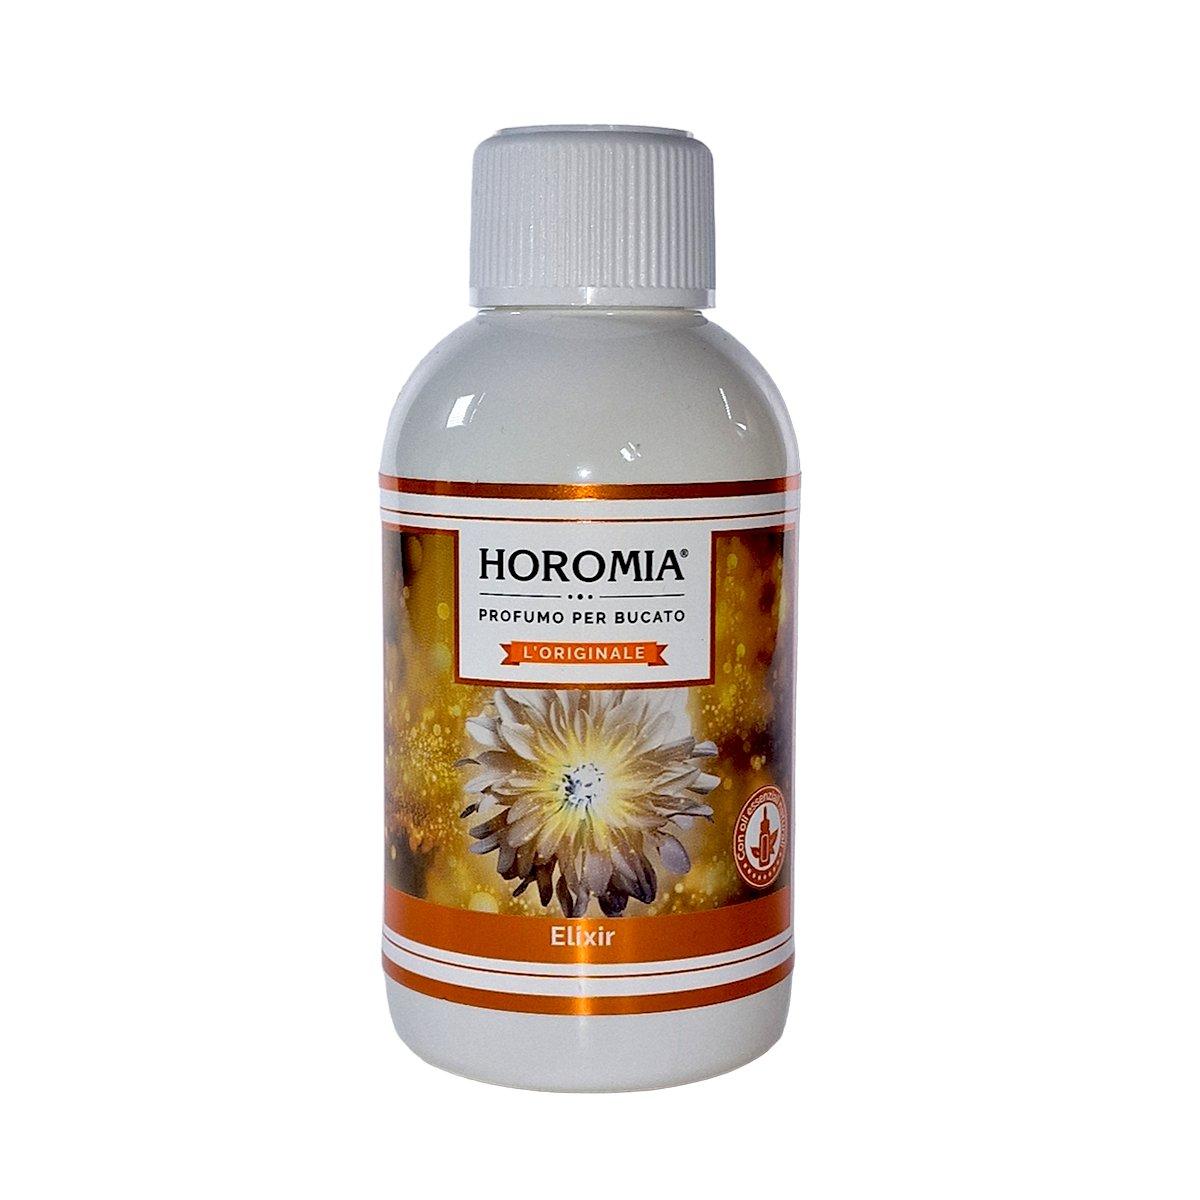 Horomia Profumatore Bucato Horomia Elixir ml.250 8057949152989 8057949152989